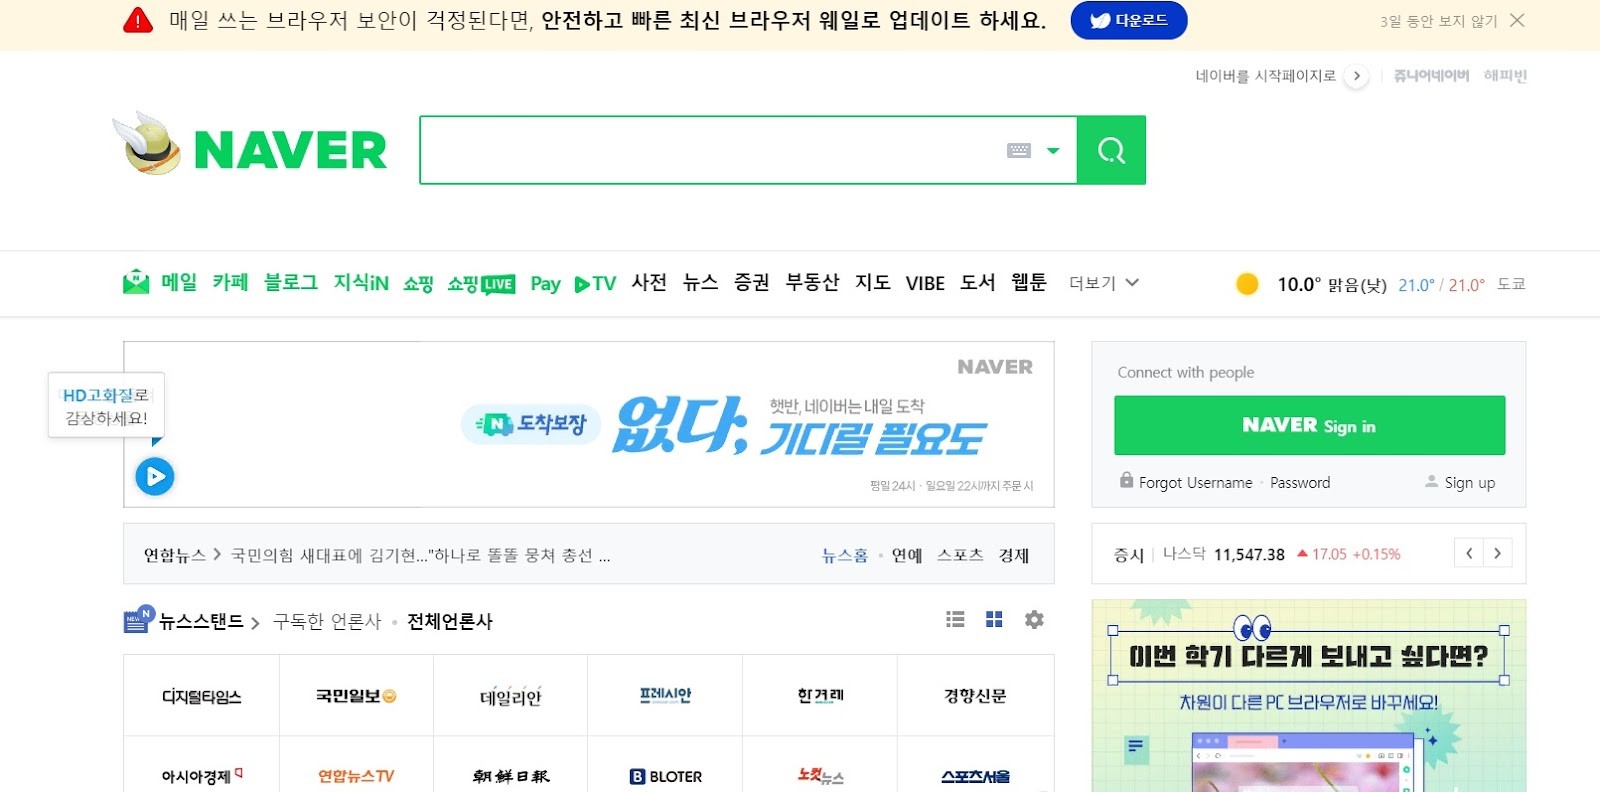 Naver - корейская альтернатива Google